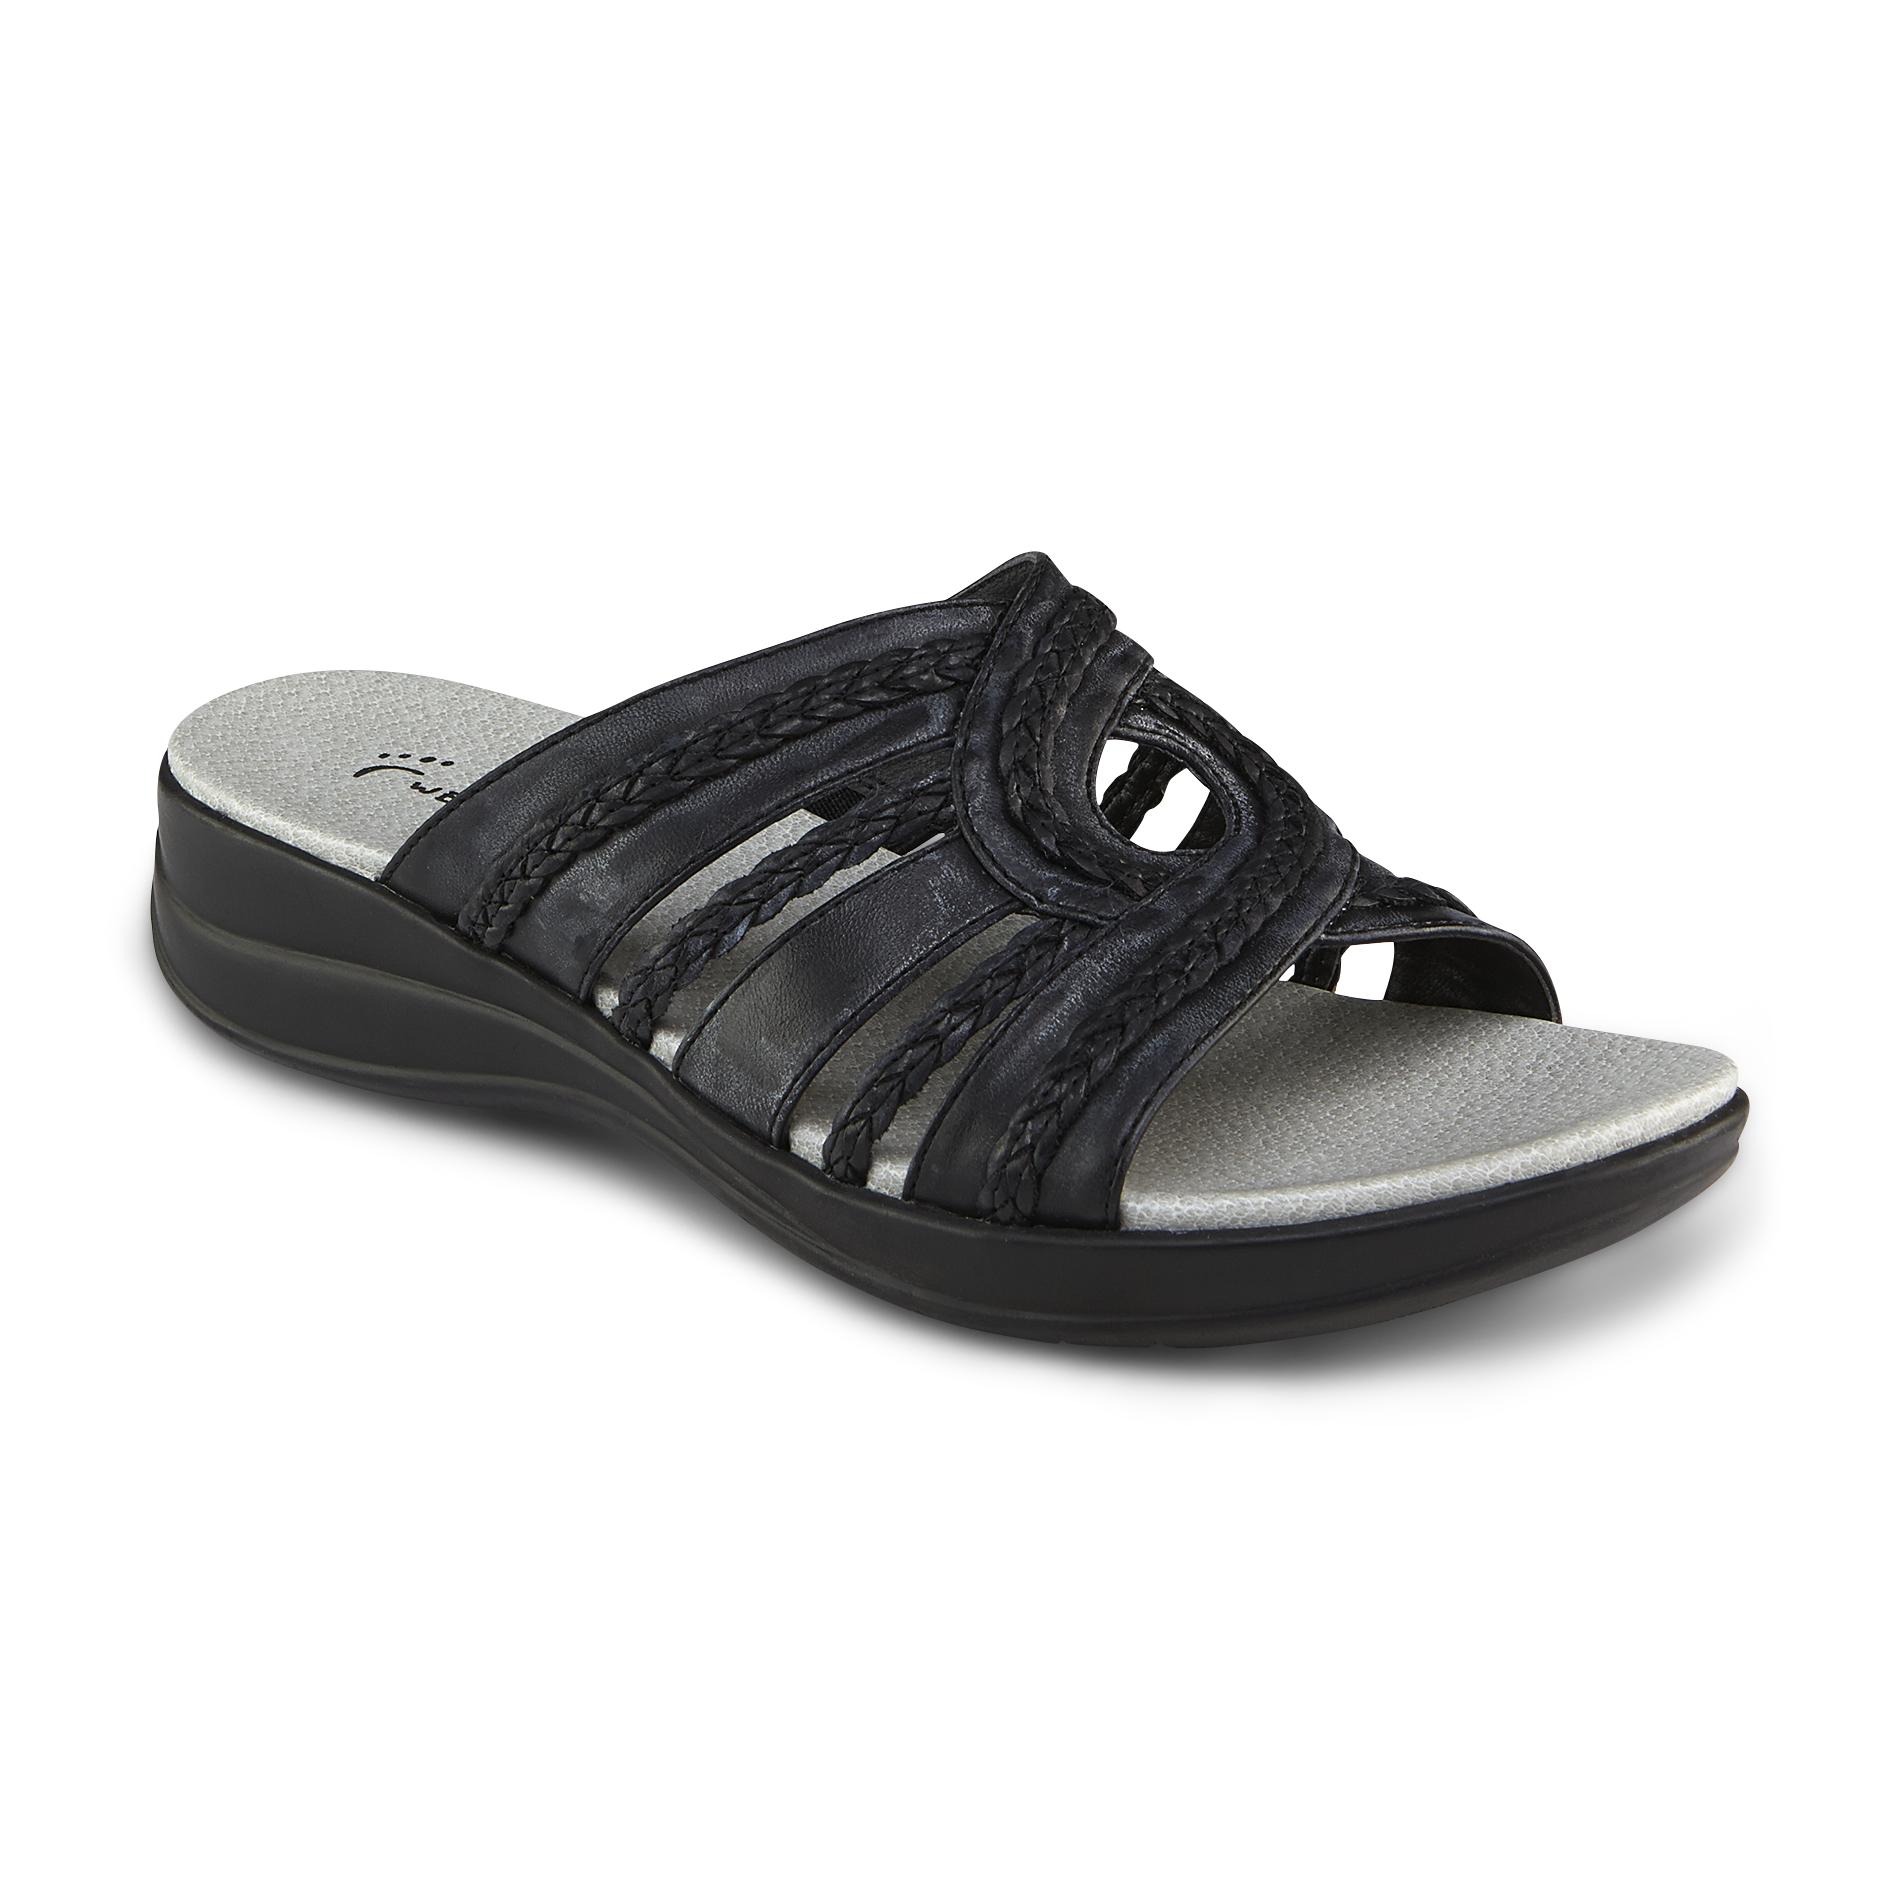 Wear Ever Women's Allday Black Slide Sandal Shoes